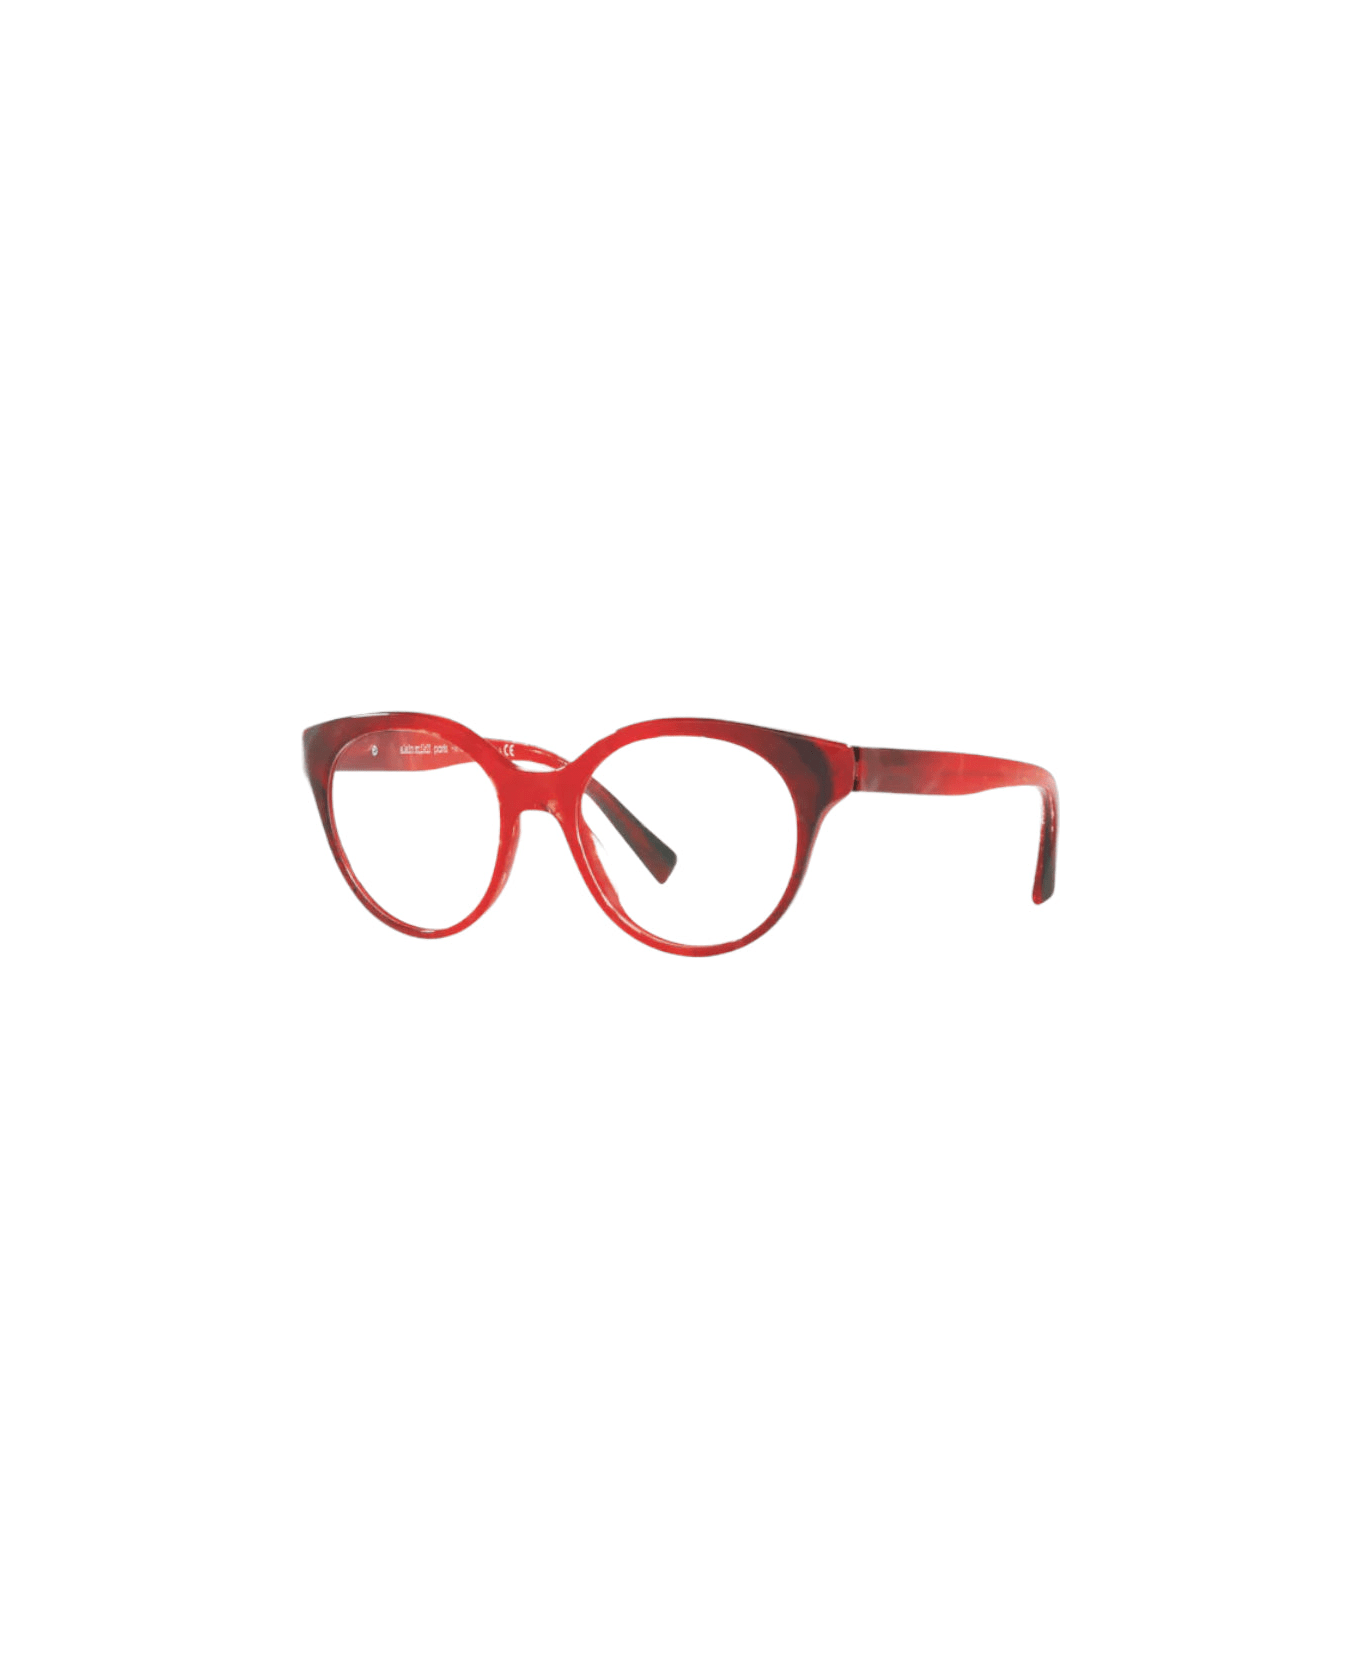 Alain Mikli Madolyn - 3097 - Red / Black Glasses アイウェア